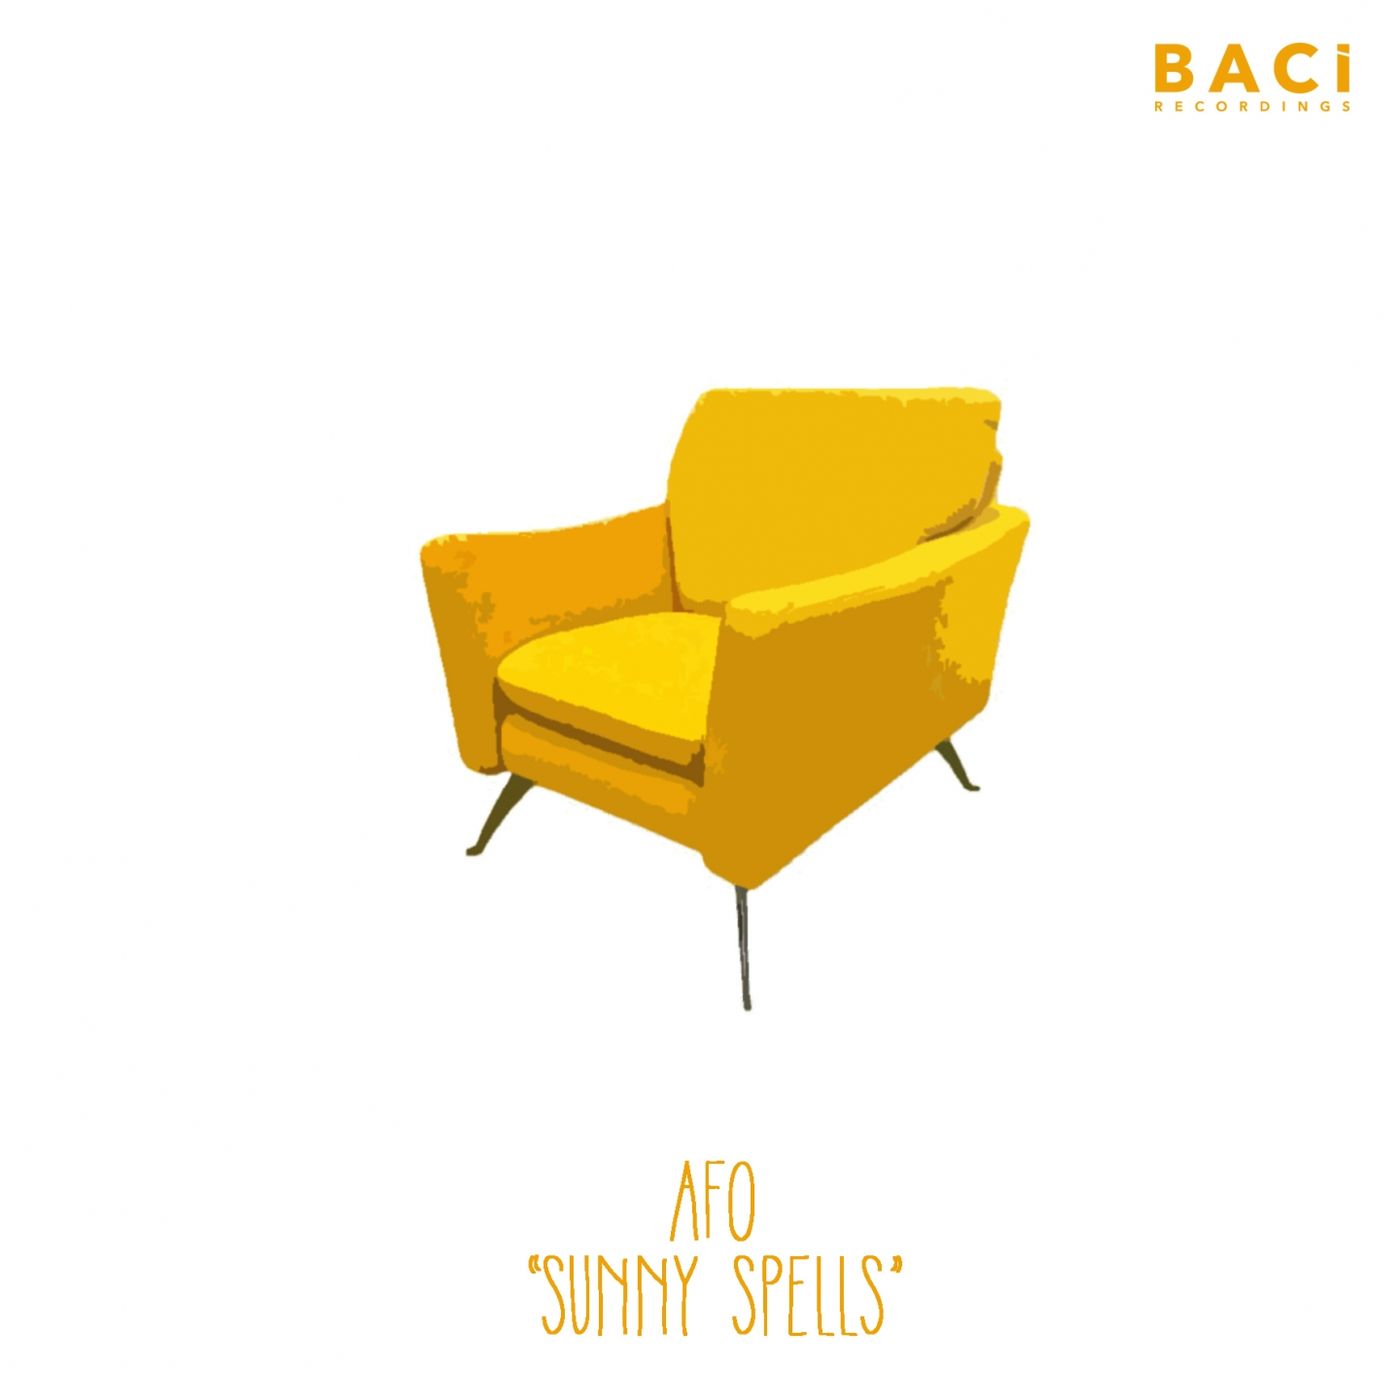 Afo - Sunny Spells / Baci Recordings